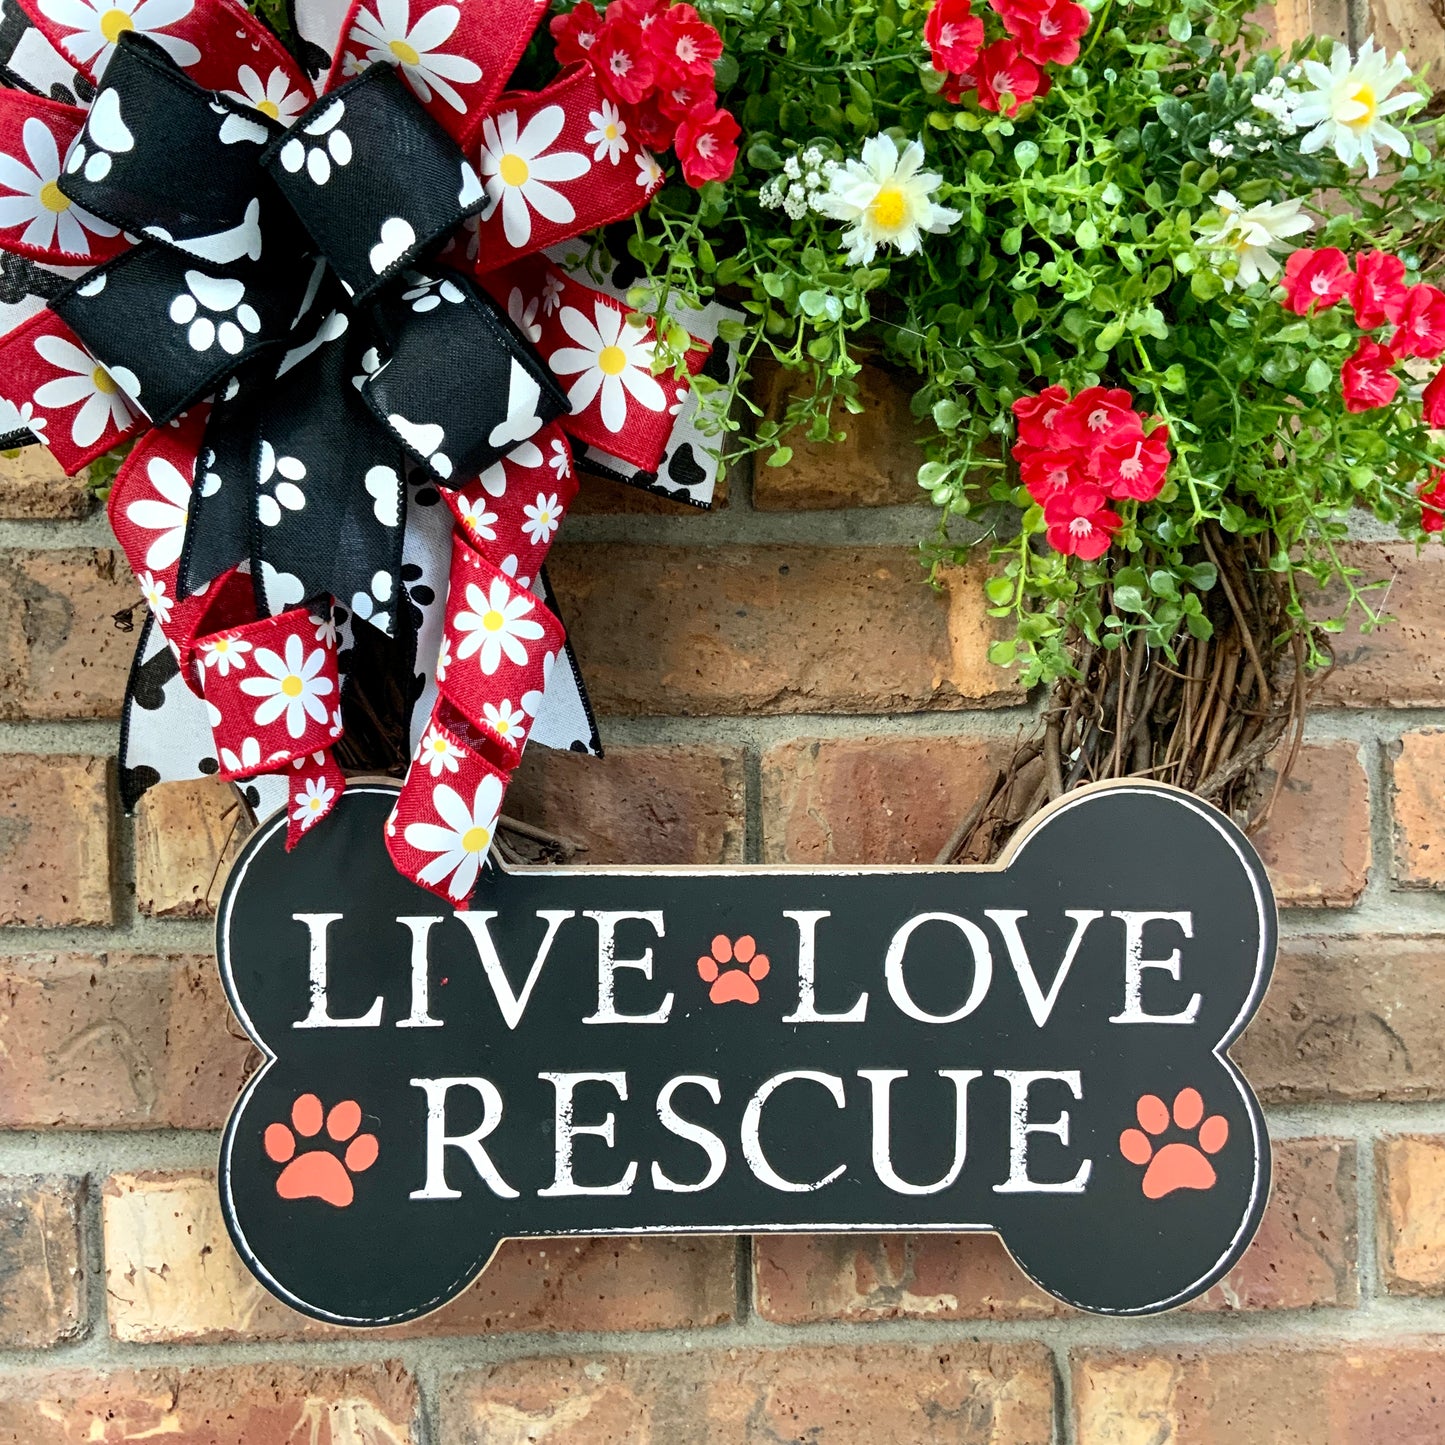 Live Love Rescue Wreath, Rescue Dog Wreath, Rescue Dog Decor, Dog Grapevine Wreath, Dog Decor, Dog Paw Print Wreath, Puppy Wreath